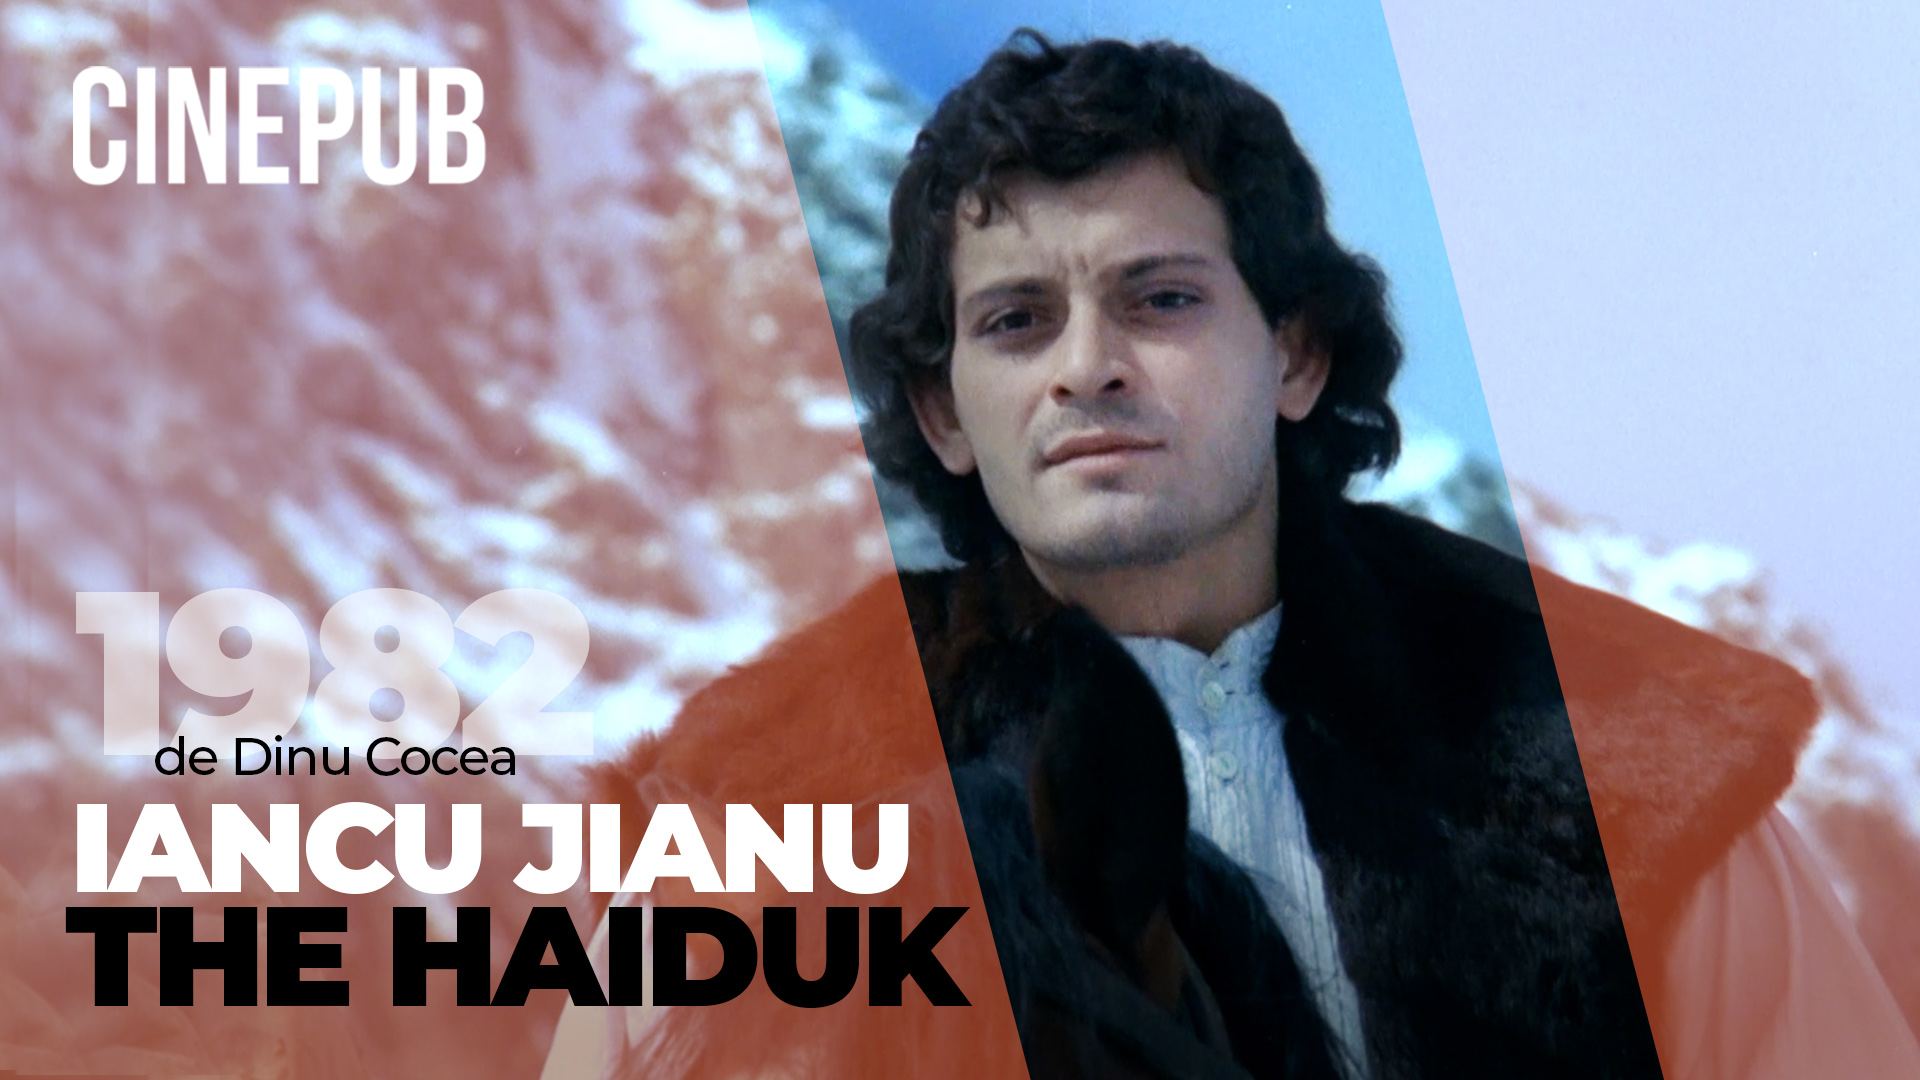 Iancu Jianu - the Haiduk (1982) - by Dinu Cocea - historical movie online on CINEPUB